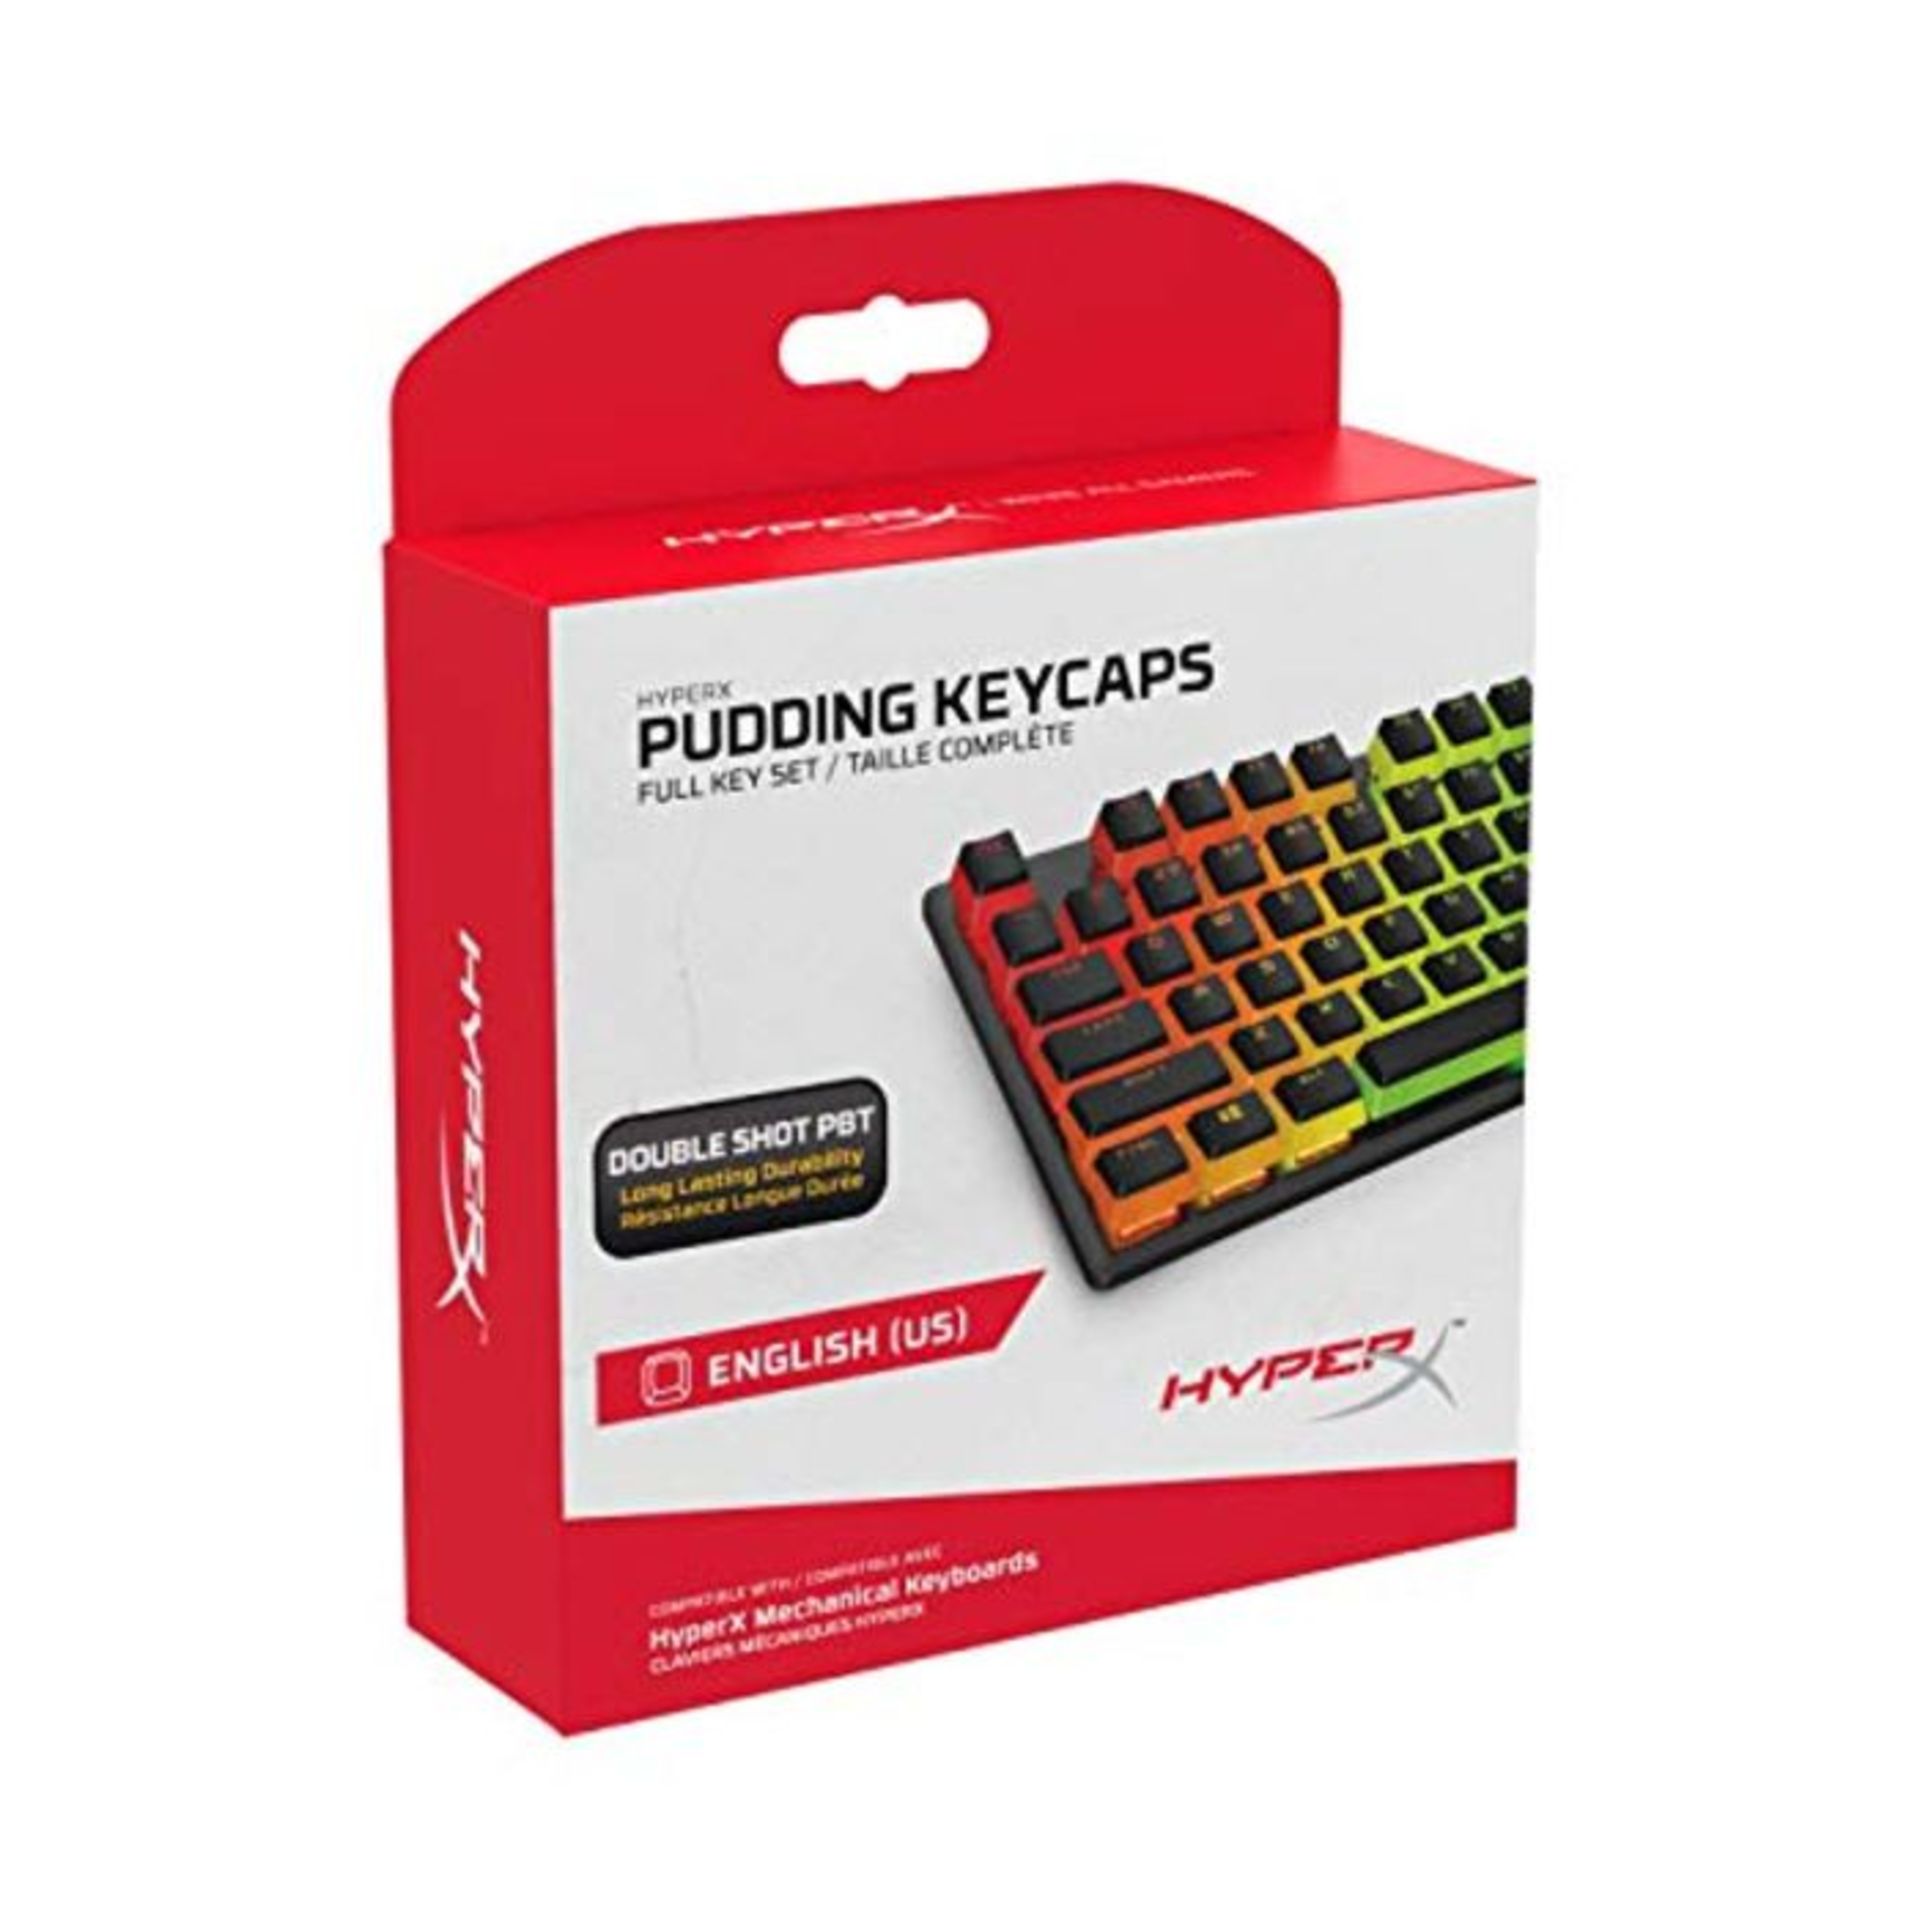 HyperX Pudding Keycaps - Full Key Set - PBT - Black - English (US) Layout - 104 Key, B